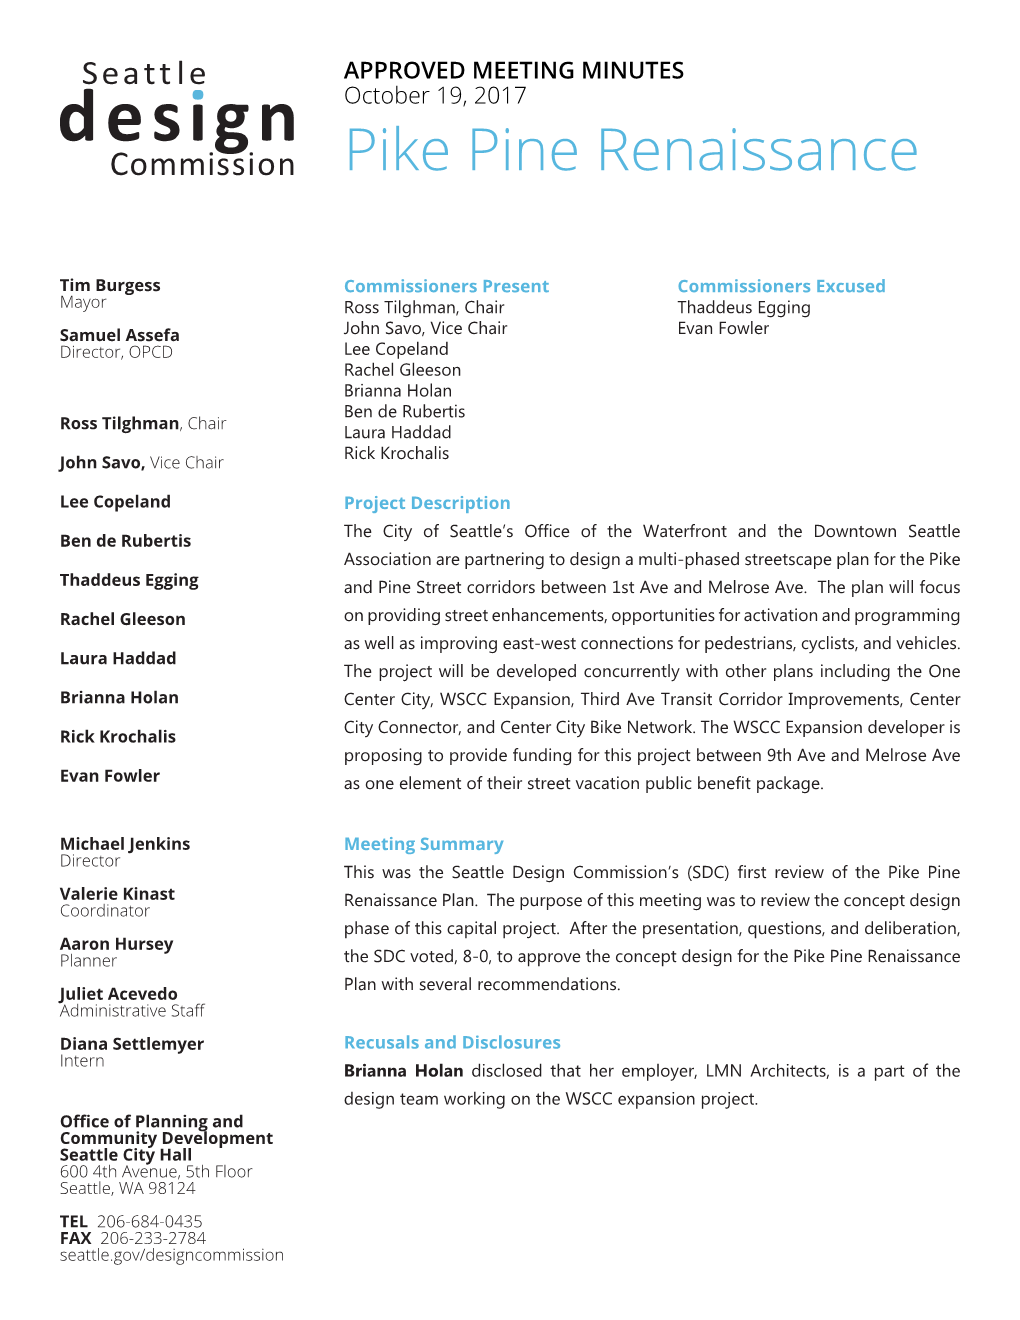 Pike Pine Renaissance